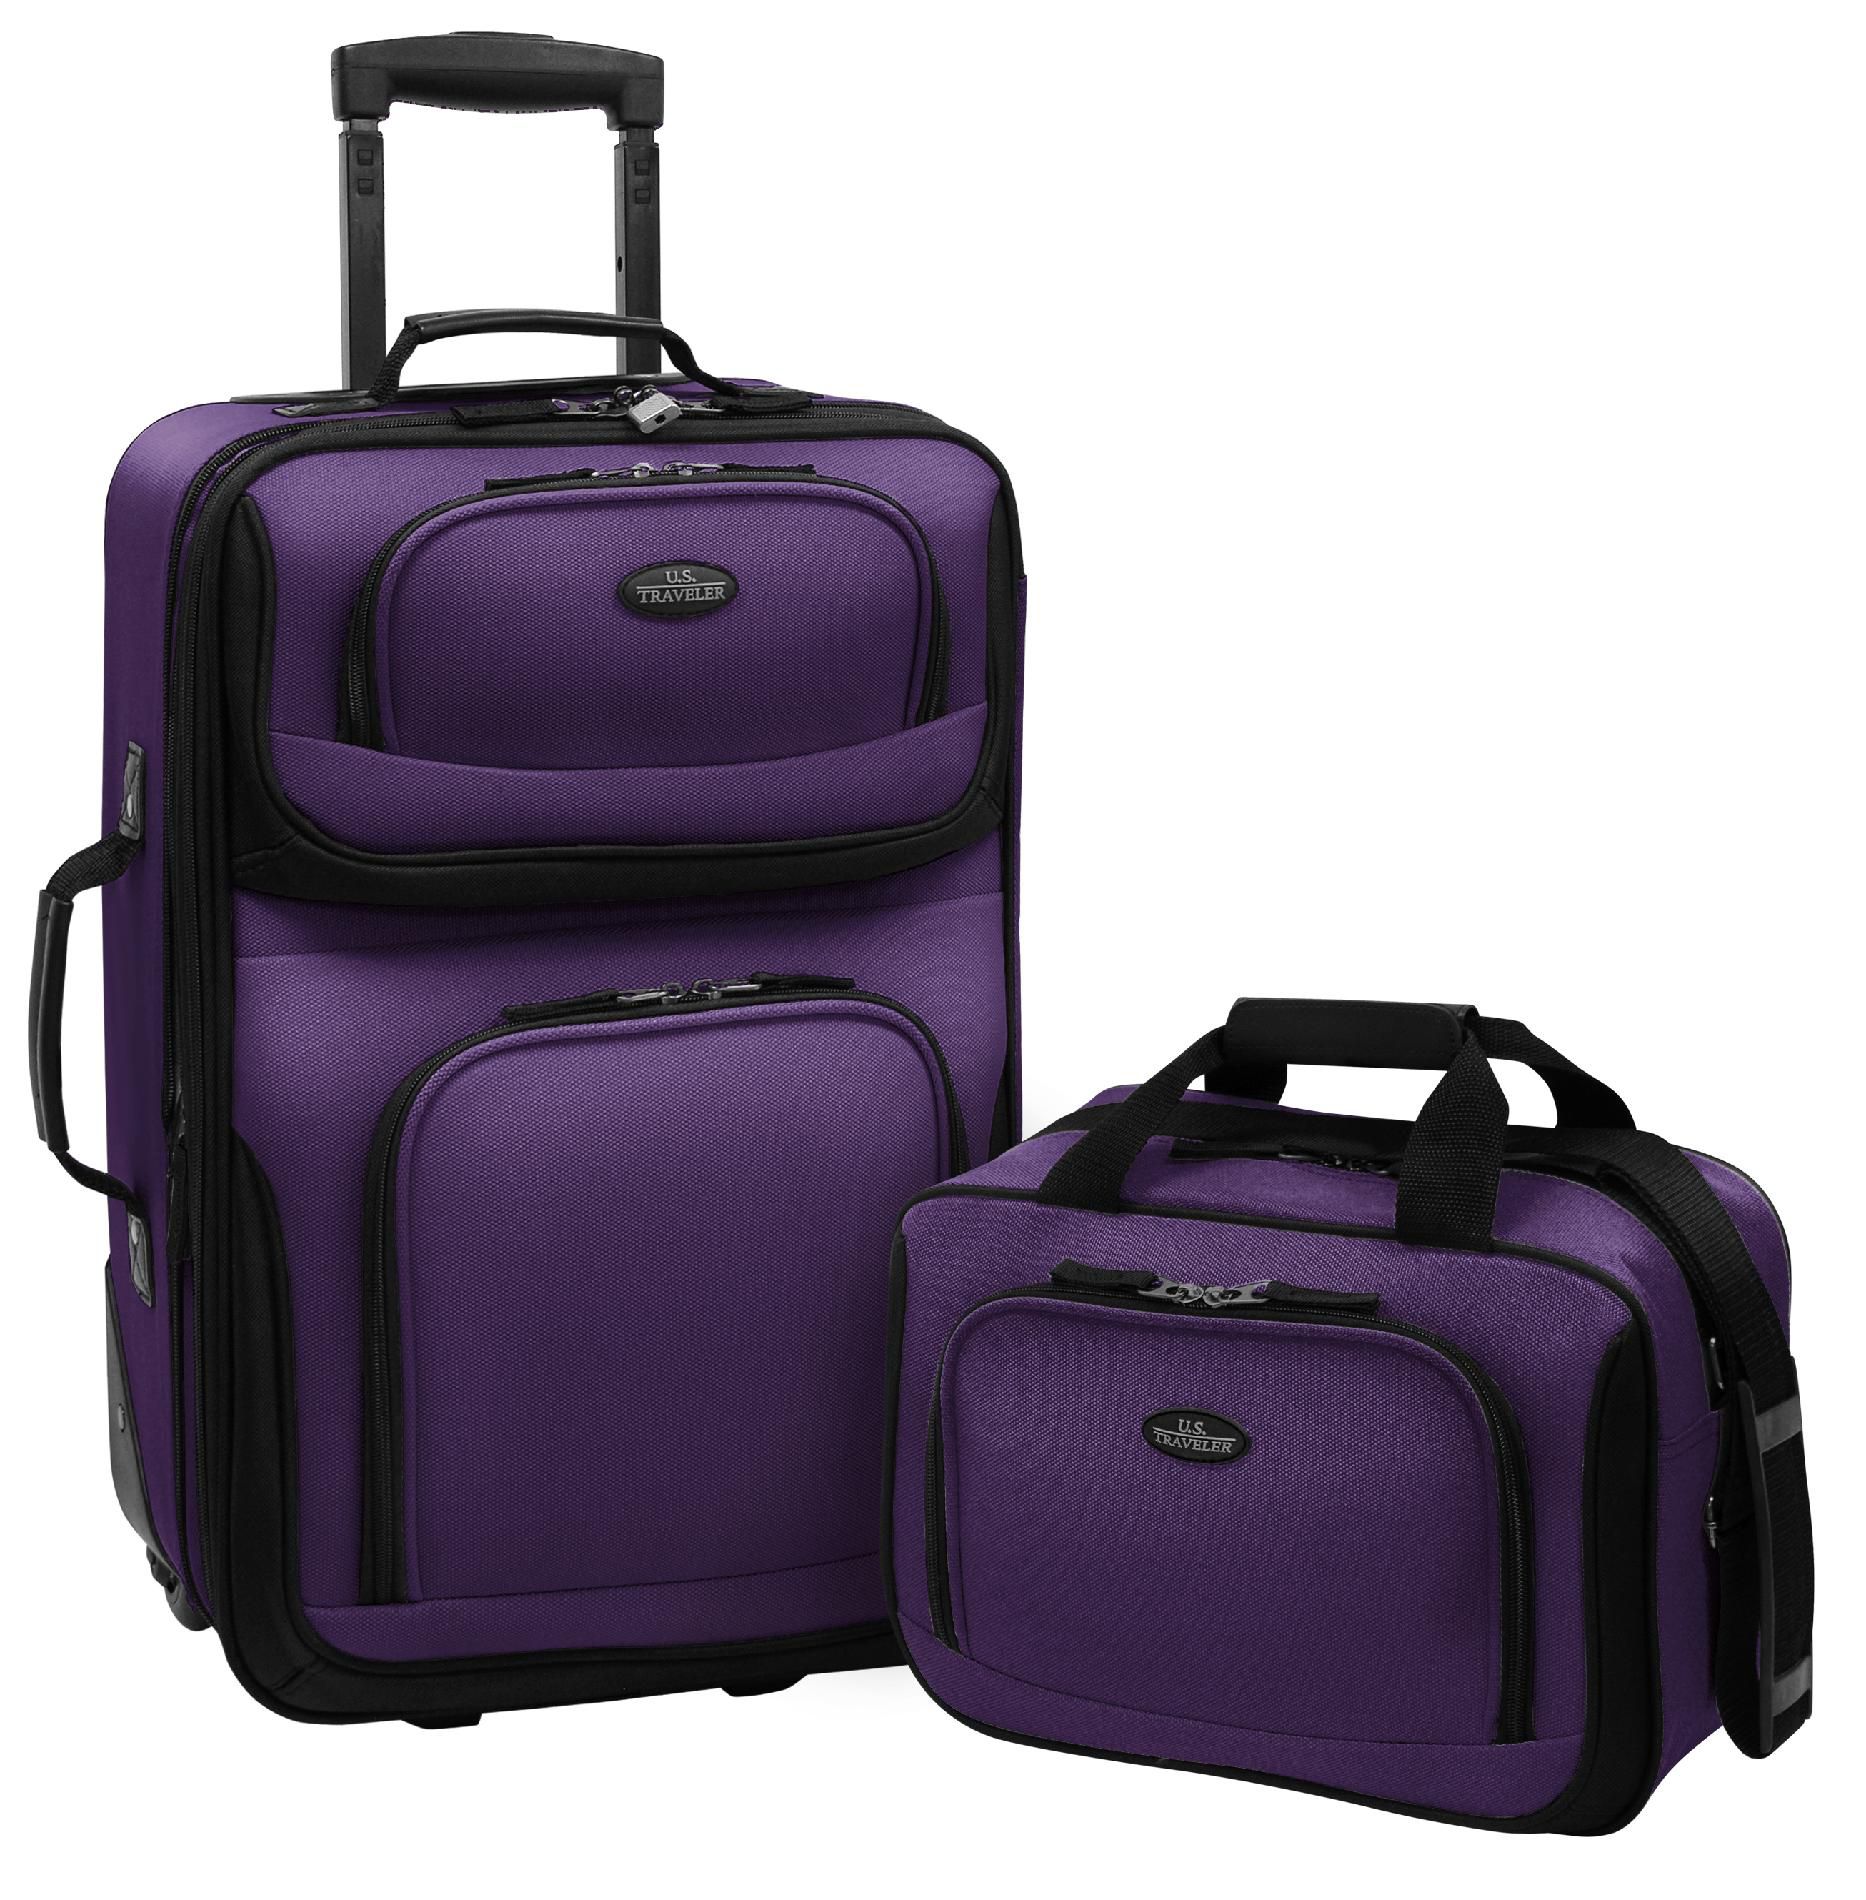 NEW 2 Piece Luggage Travel Set, Expandable Carry On Wheeled Suitcase ...